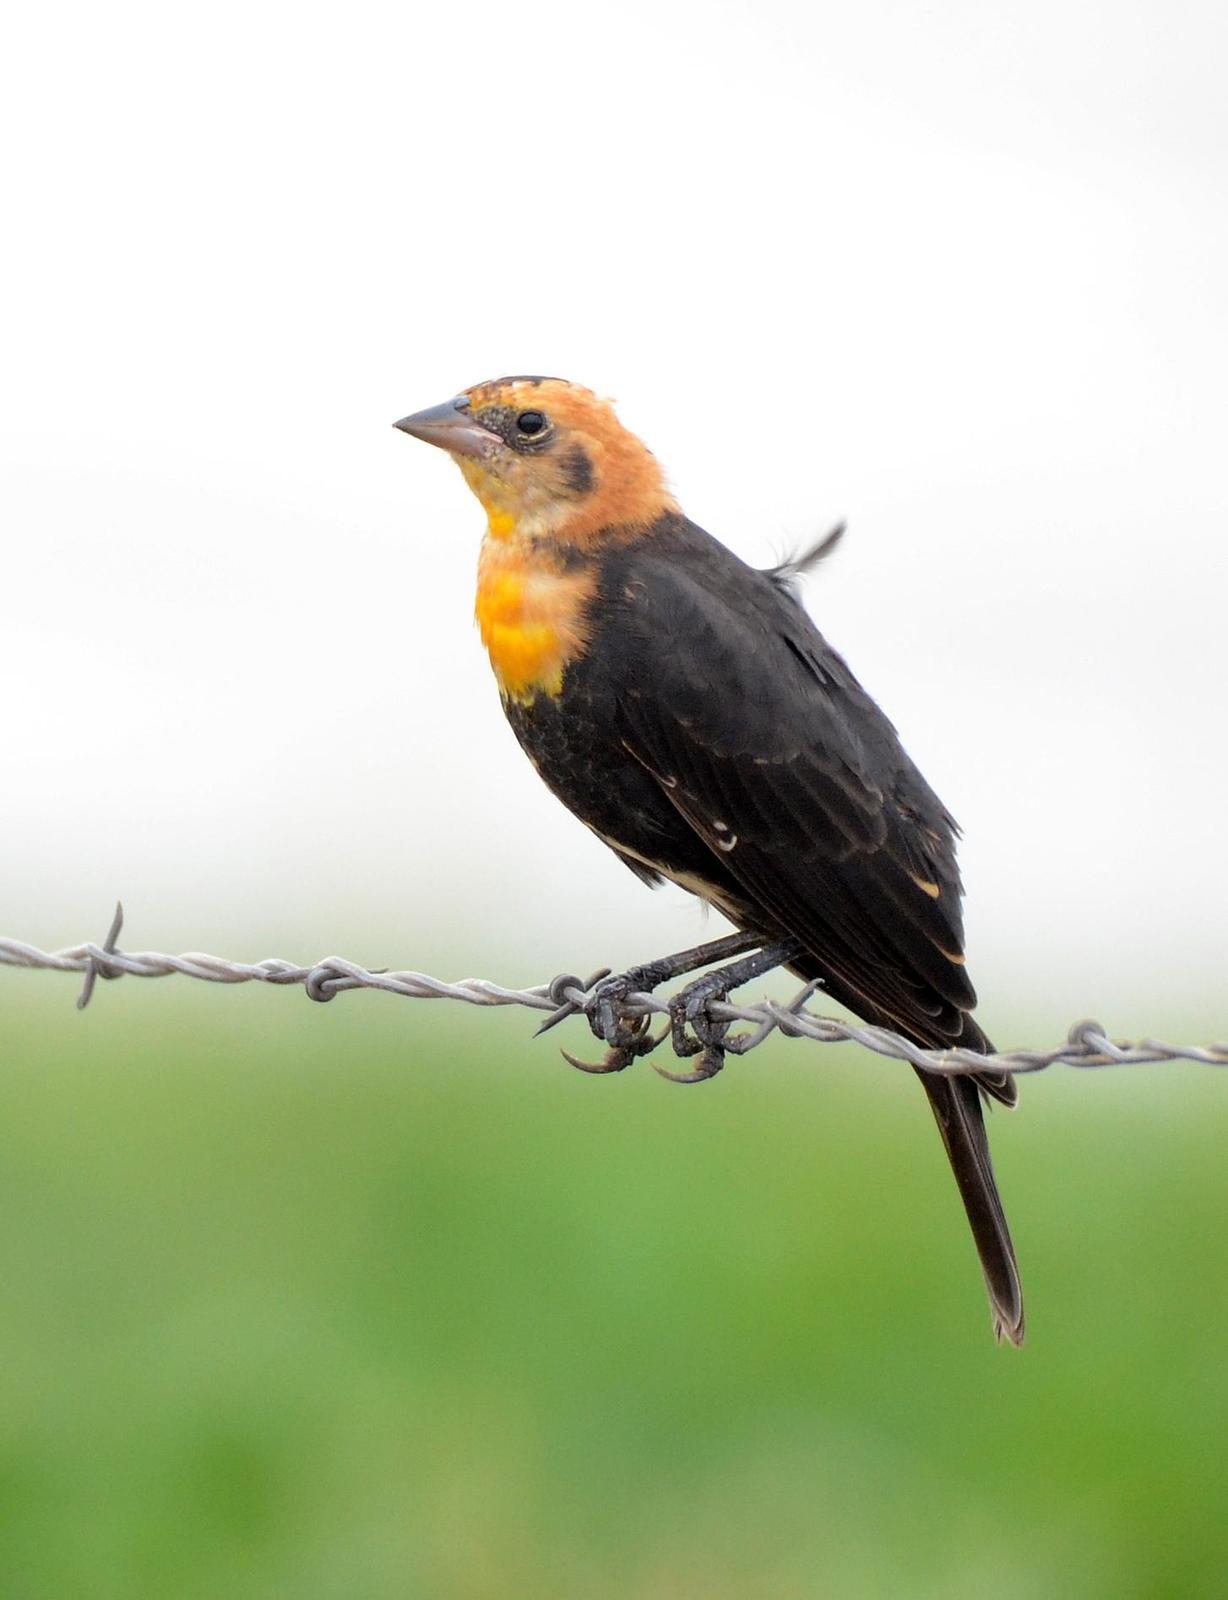 Yellow-headed Blackbird Photo by Steven Mlodinow